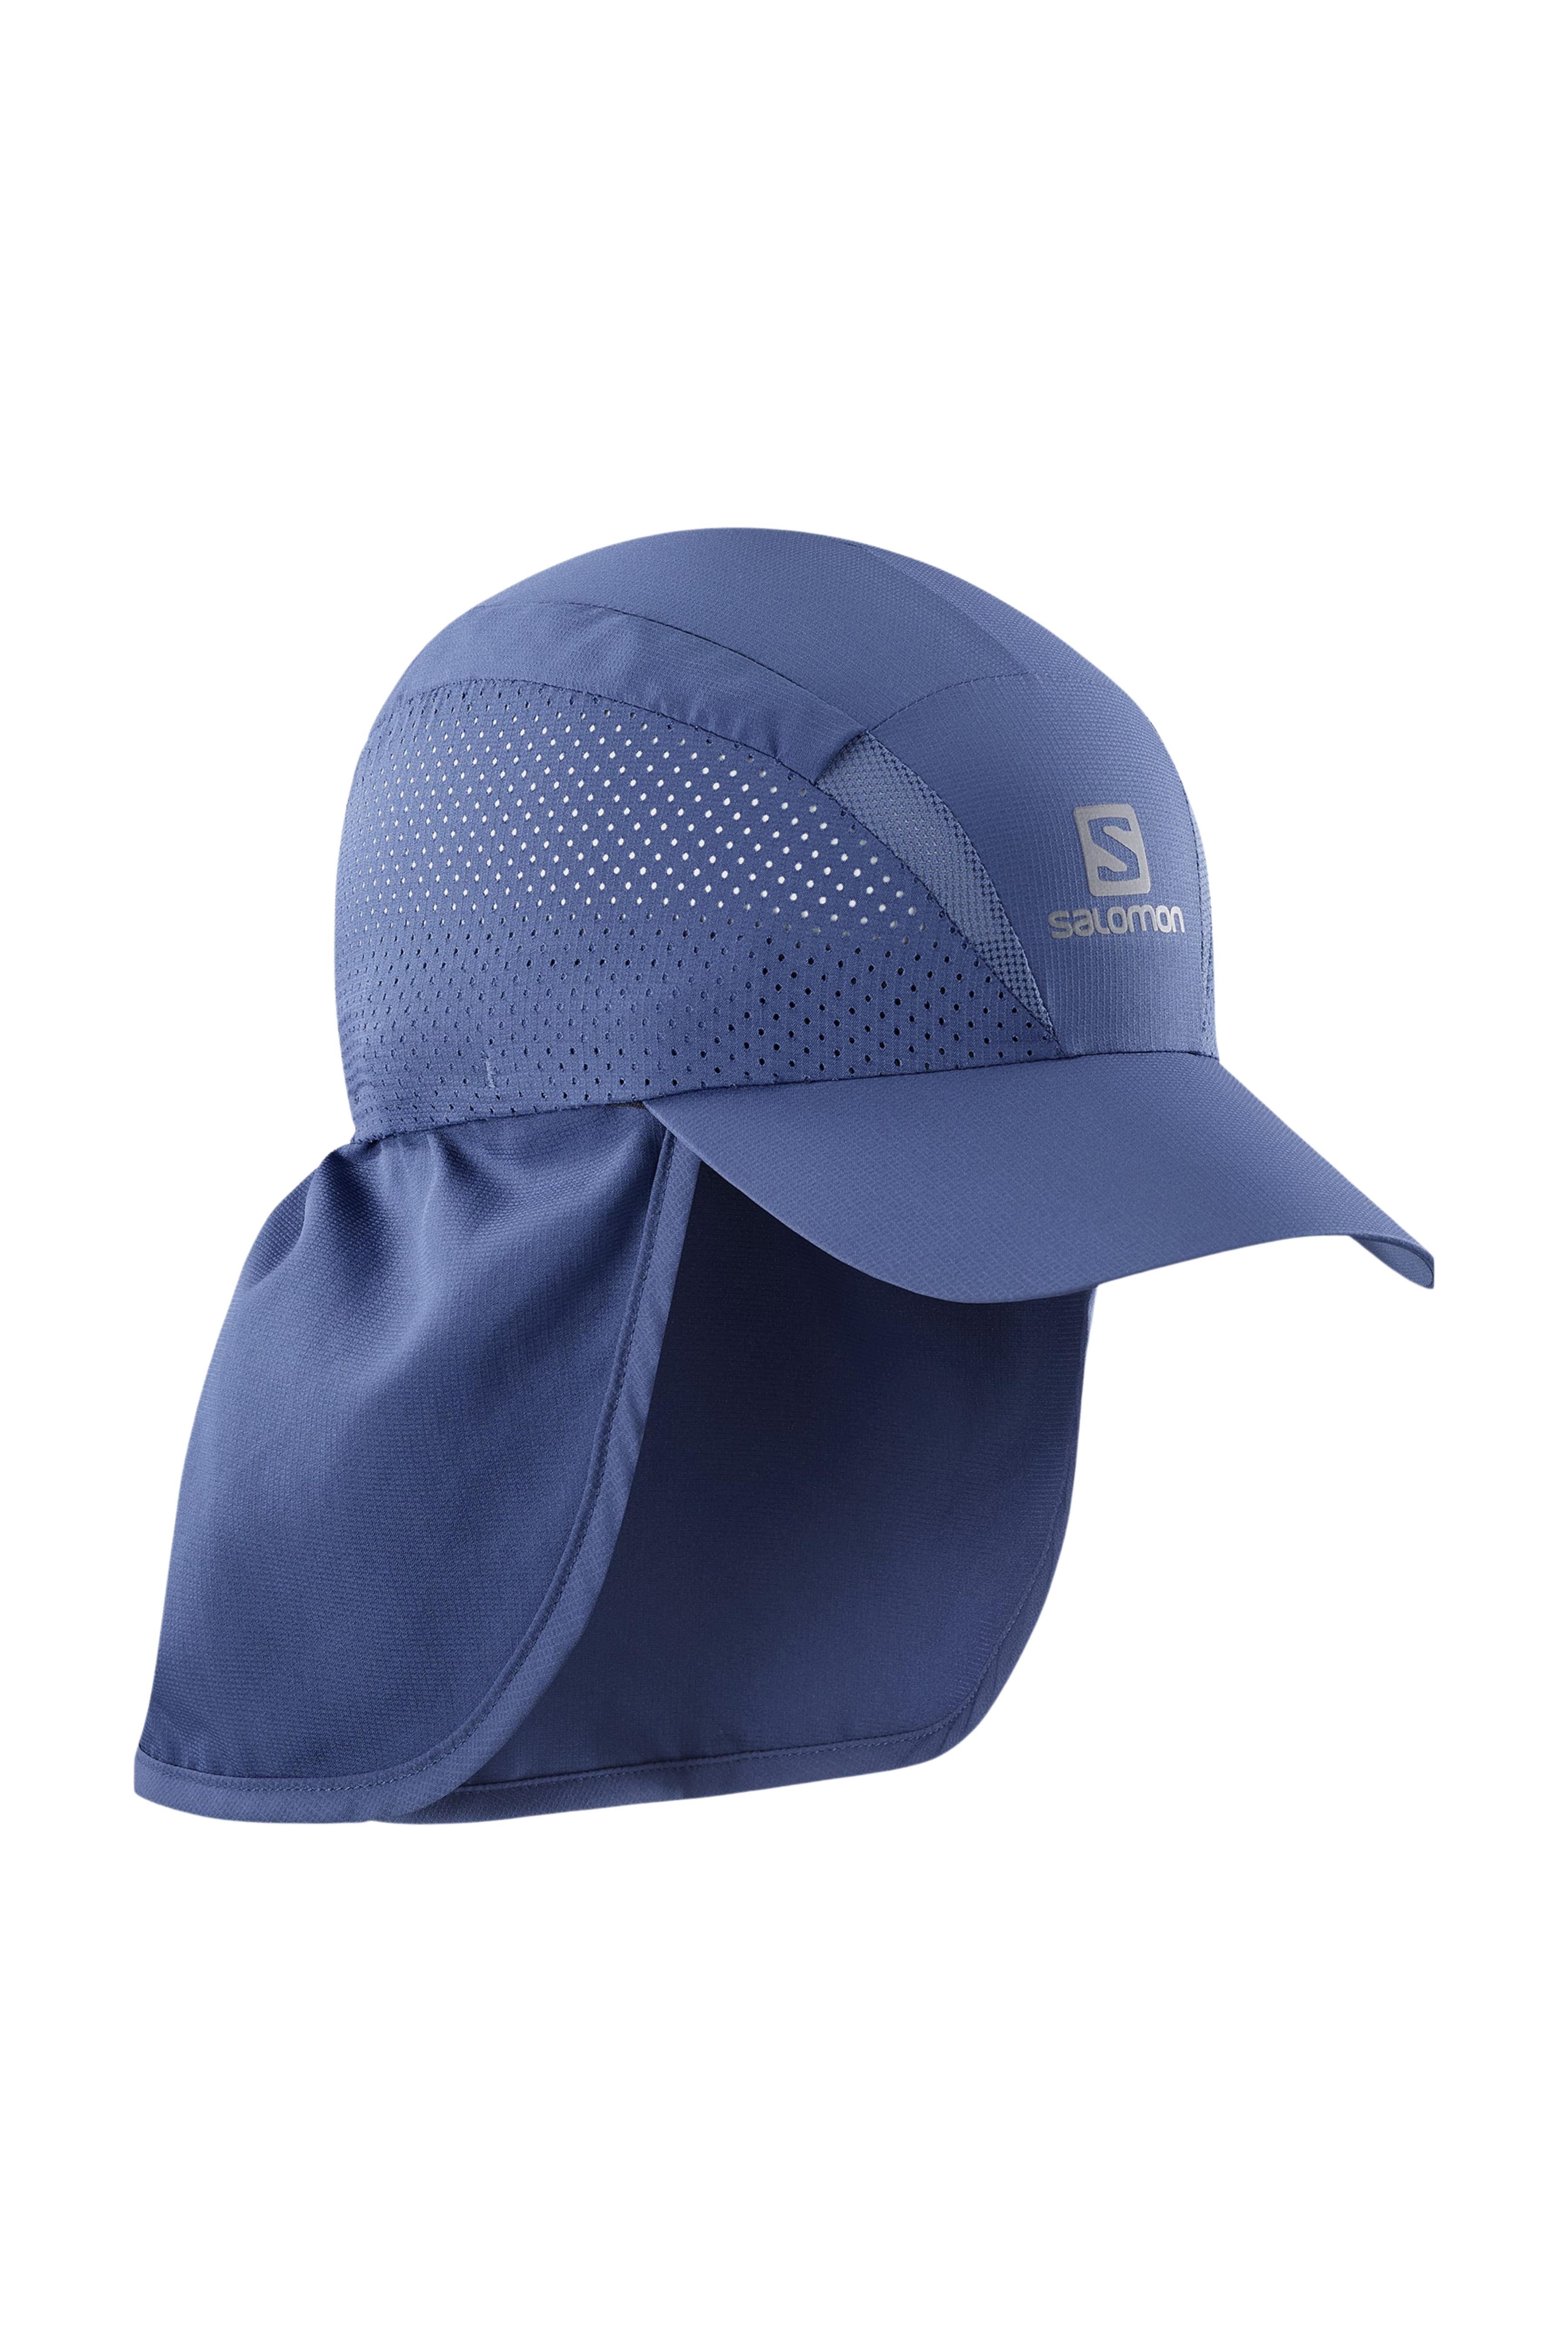 Salomon XA Cap Unisex Lacivert Şapka